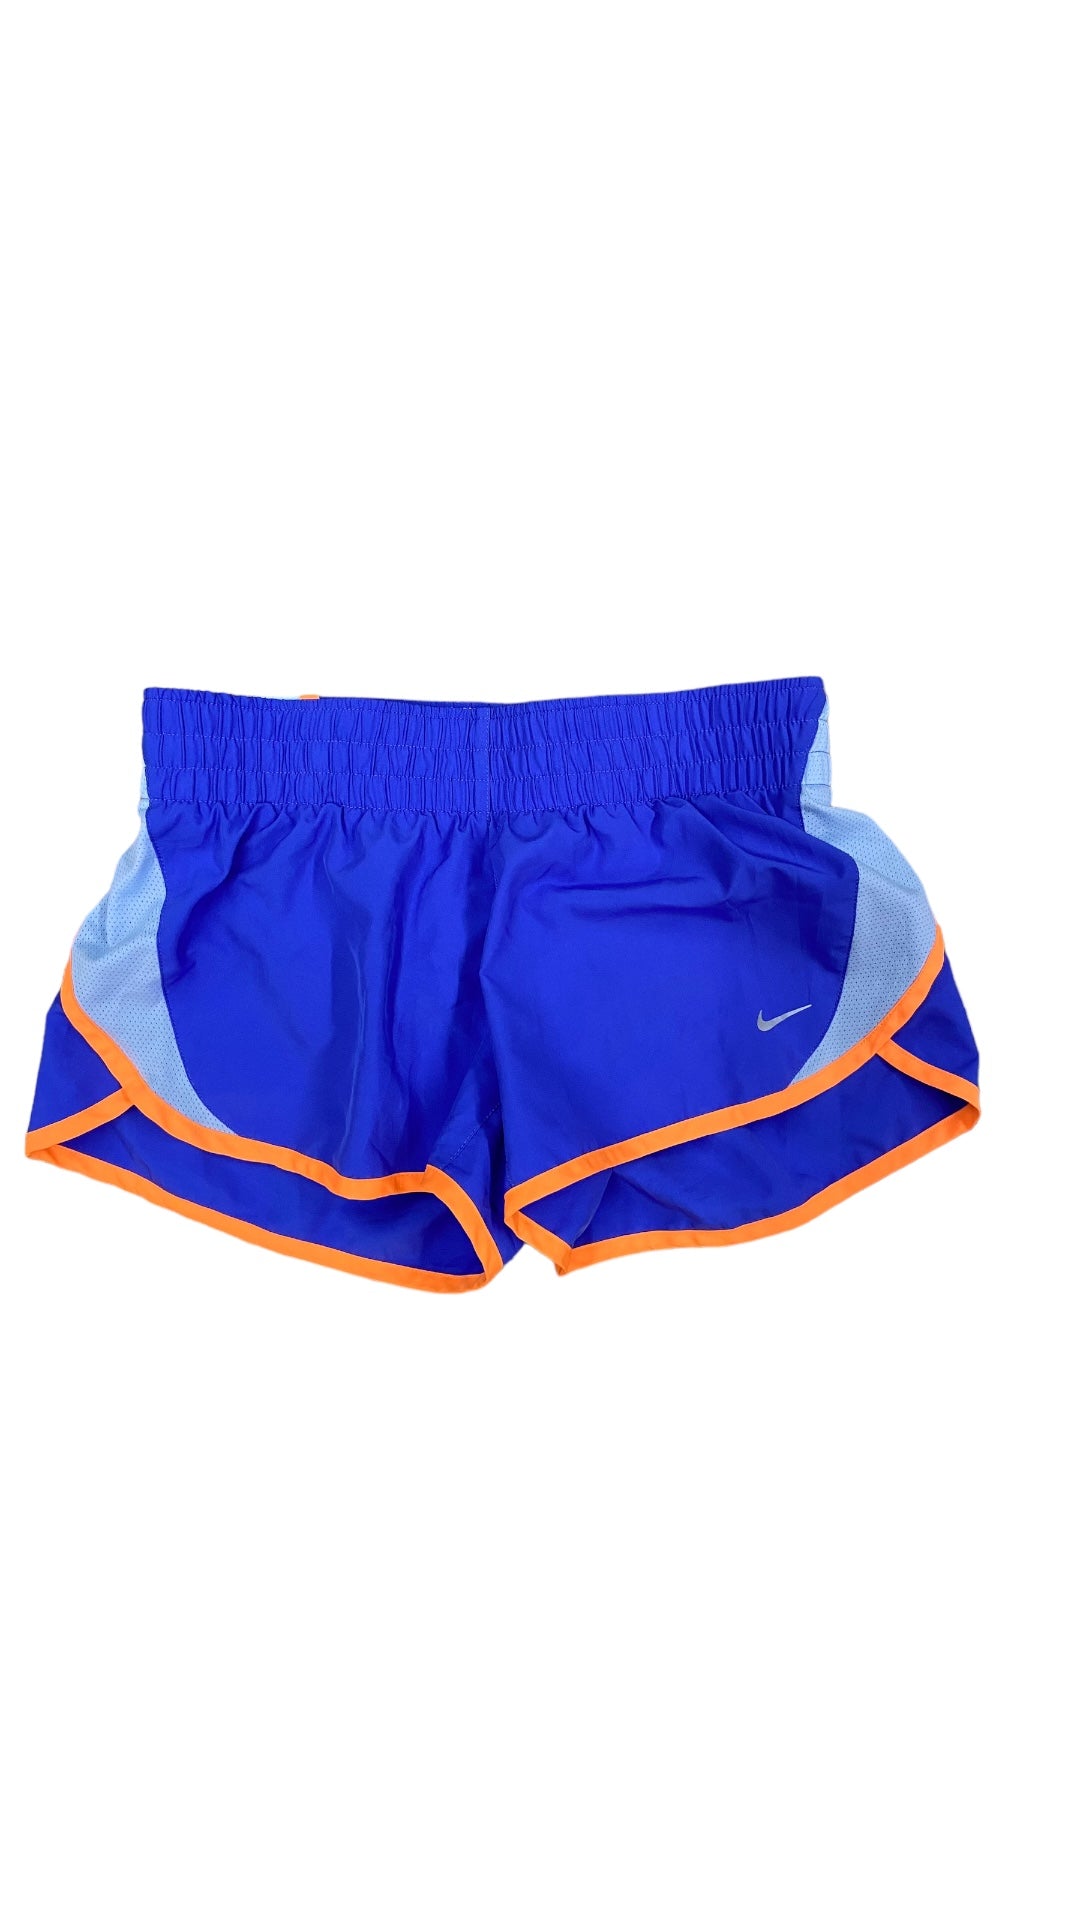 Wmns Nike Running Dry Fit Blue/Orange Short Sz S